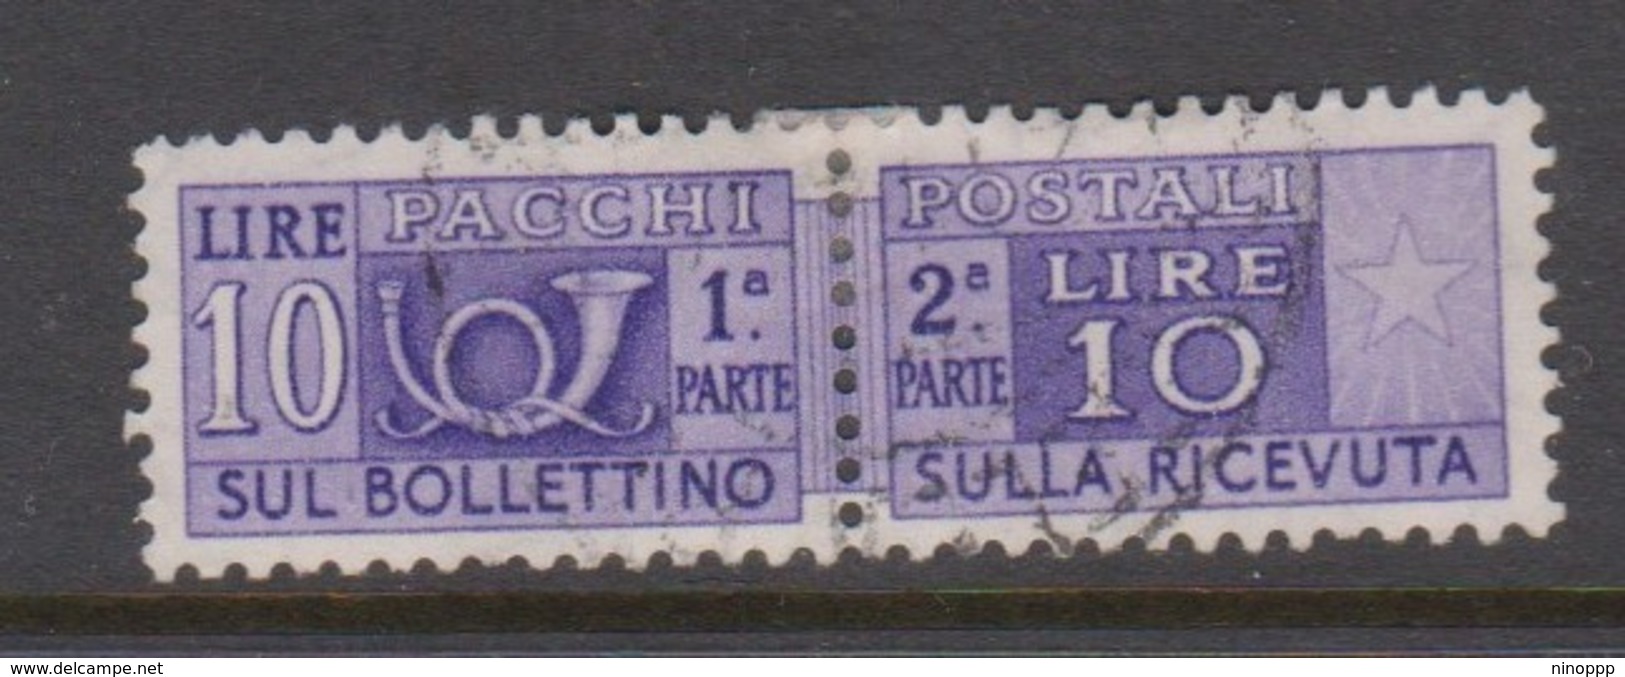 Italy Republic PP 85 1955-79 ,Parcel Post,watermark Stars, Lire 10 Violet,Used - Postpaketten